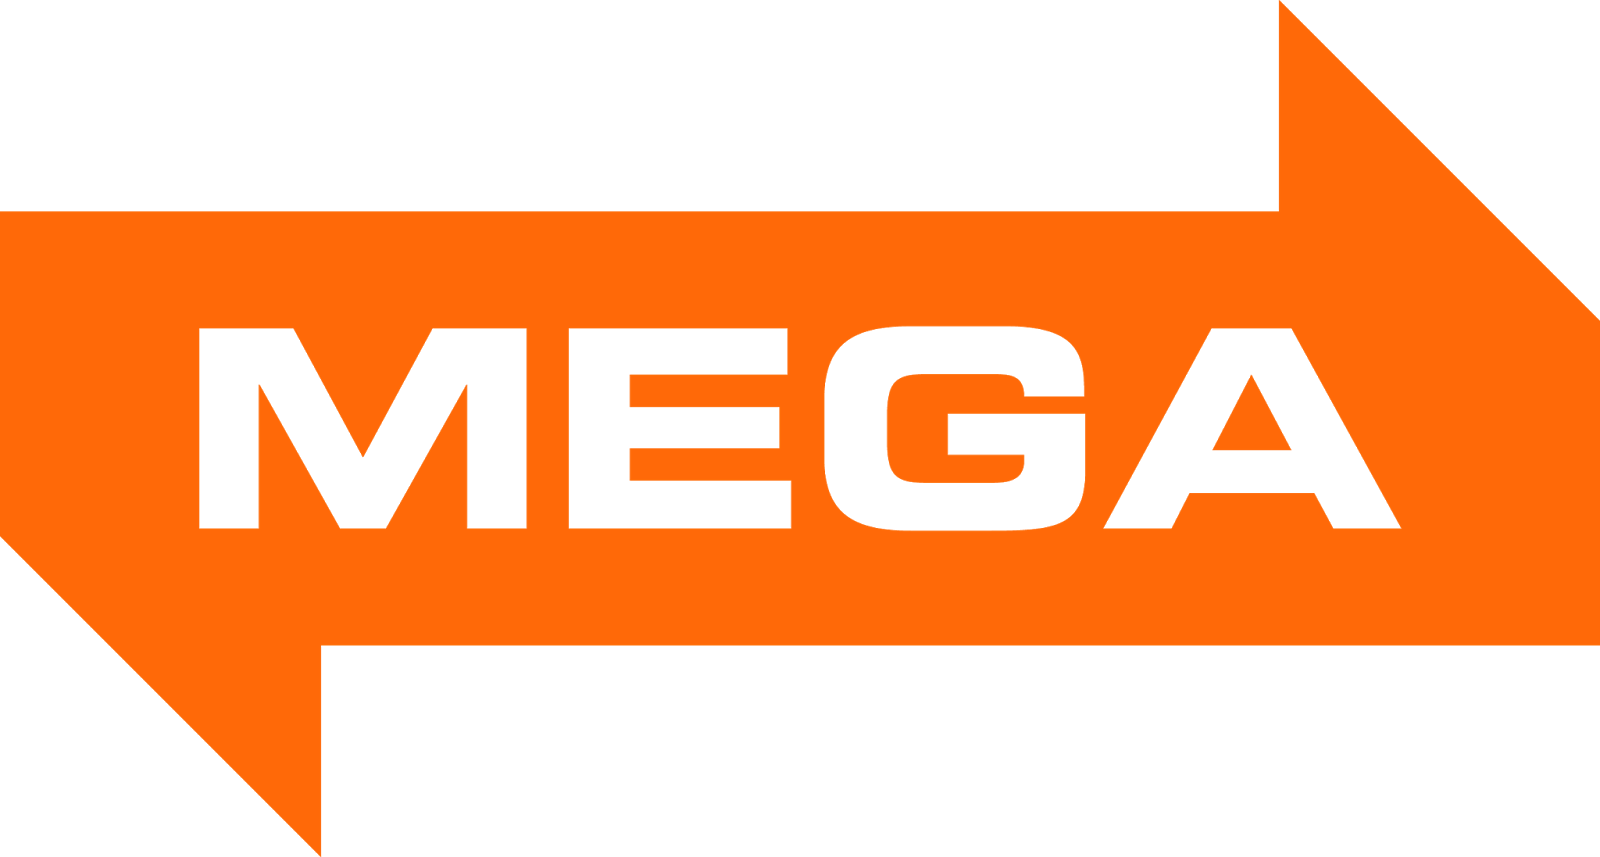 Mega. Mega иконка. Надпись Mega. Mega облачное хранилище логотип. Mega com nz